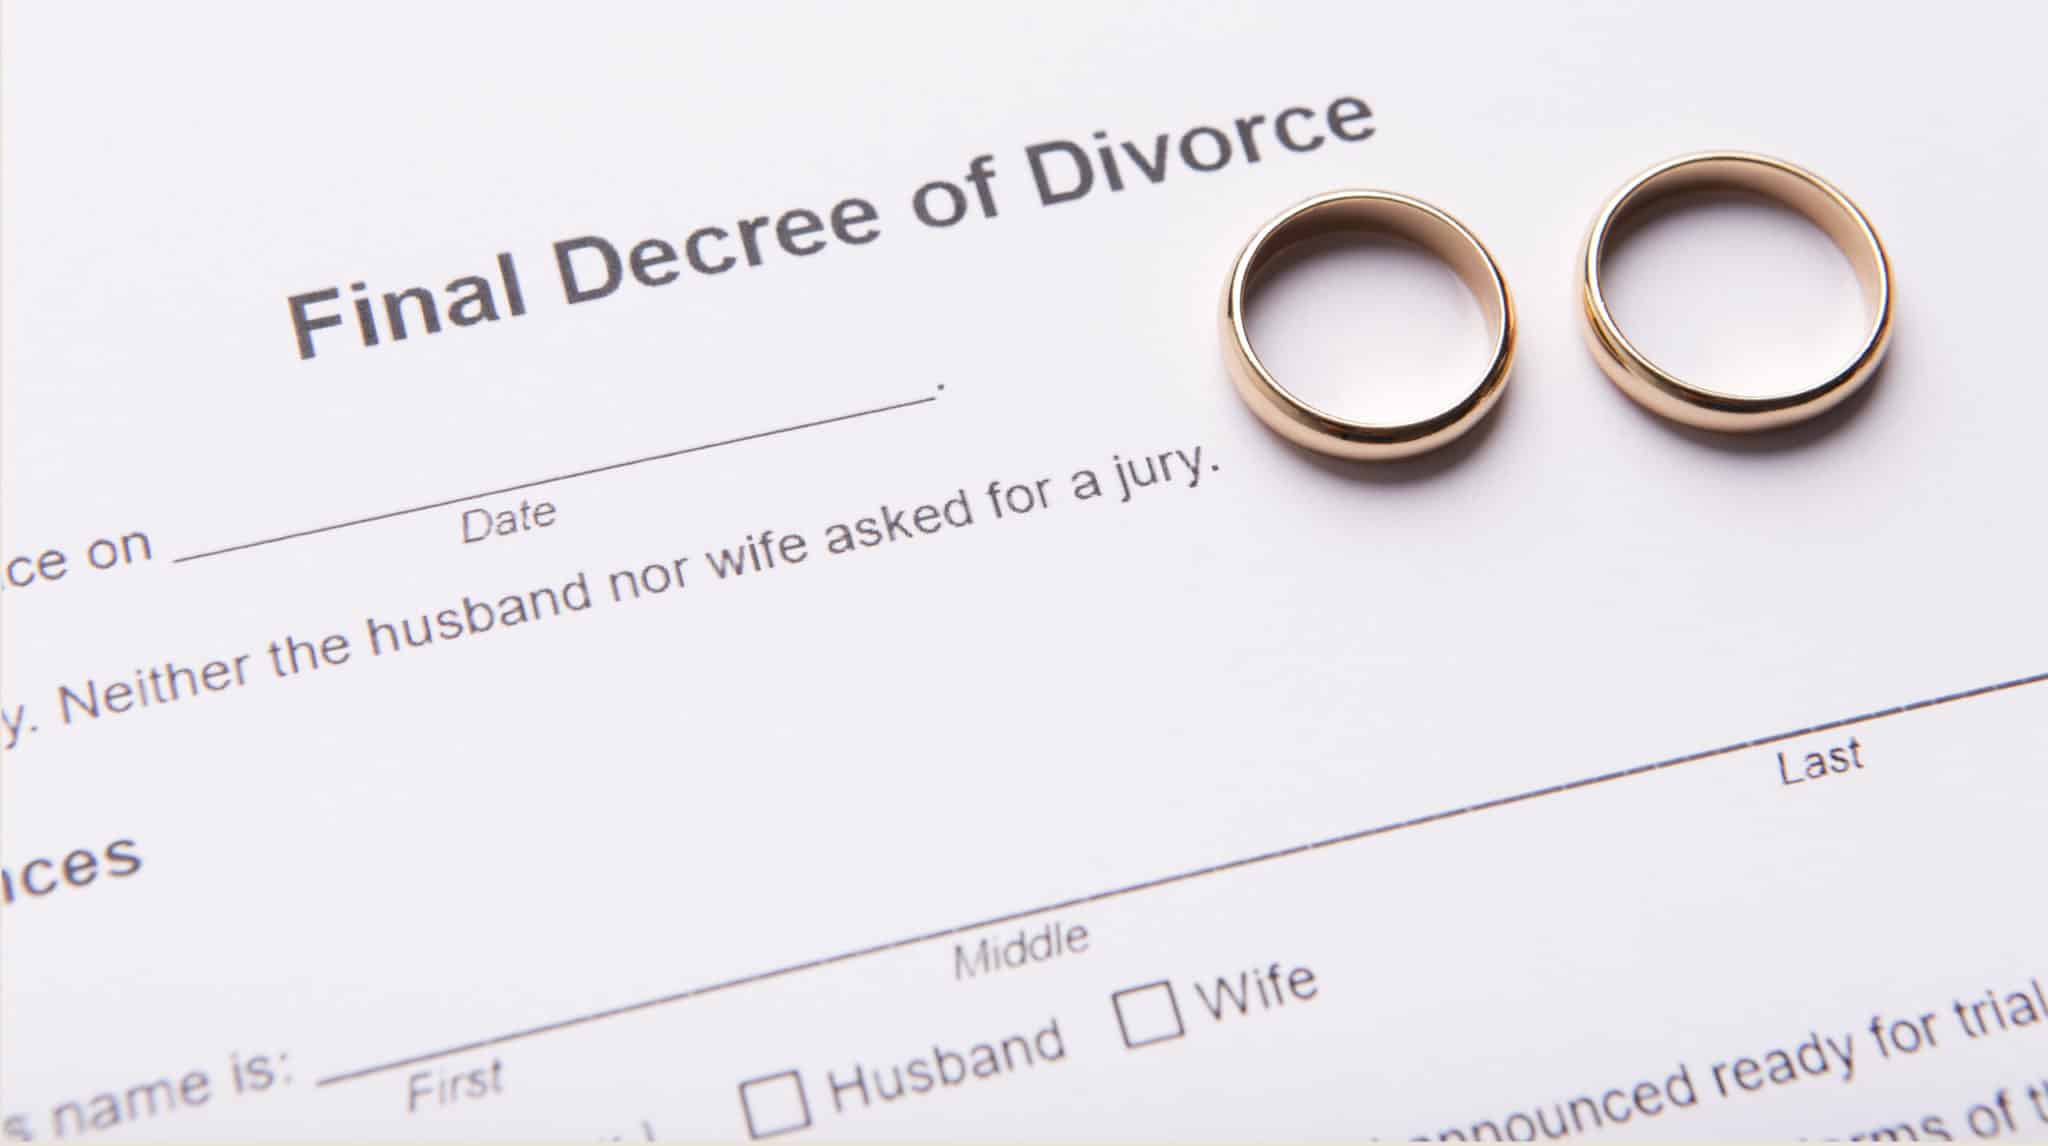 Two golden wedding rings on final divorce decree document